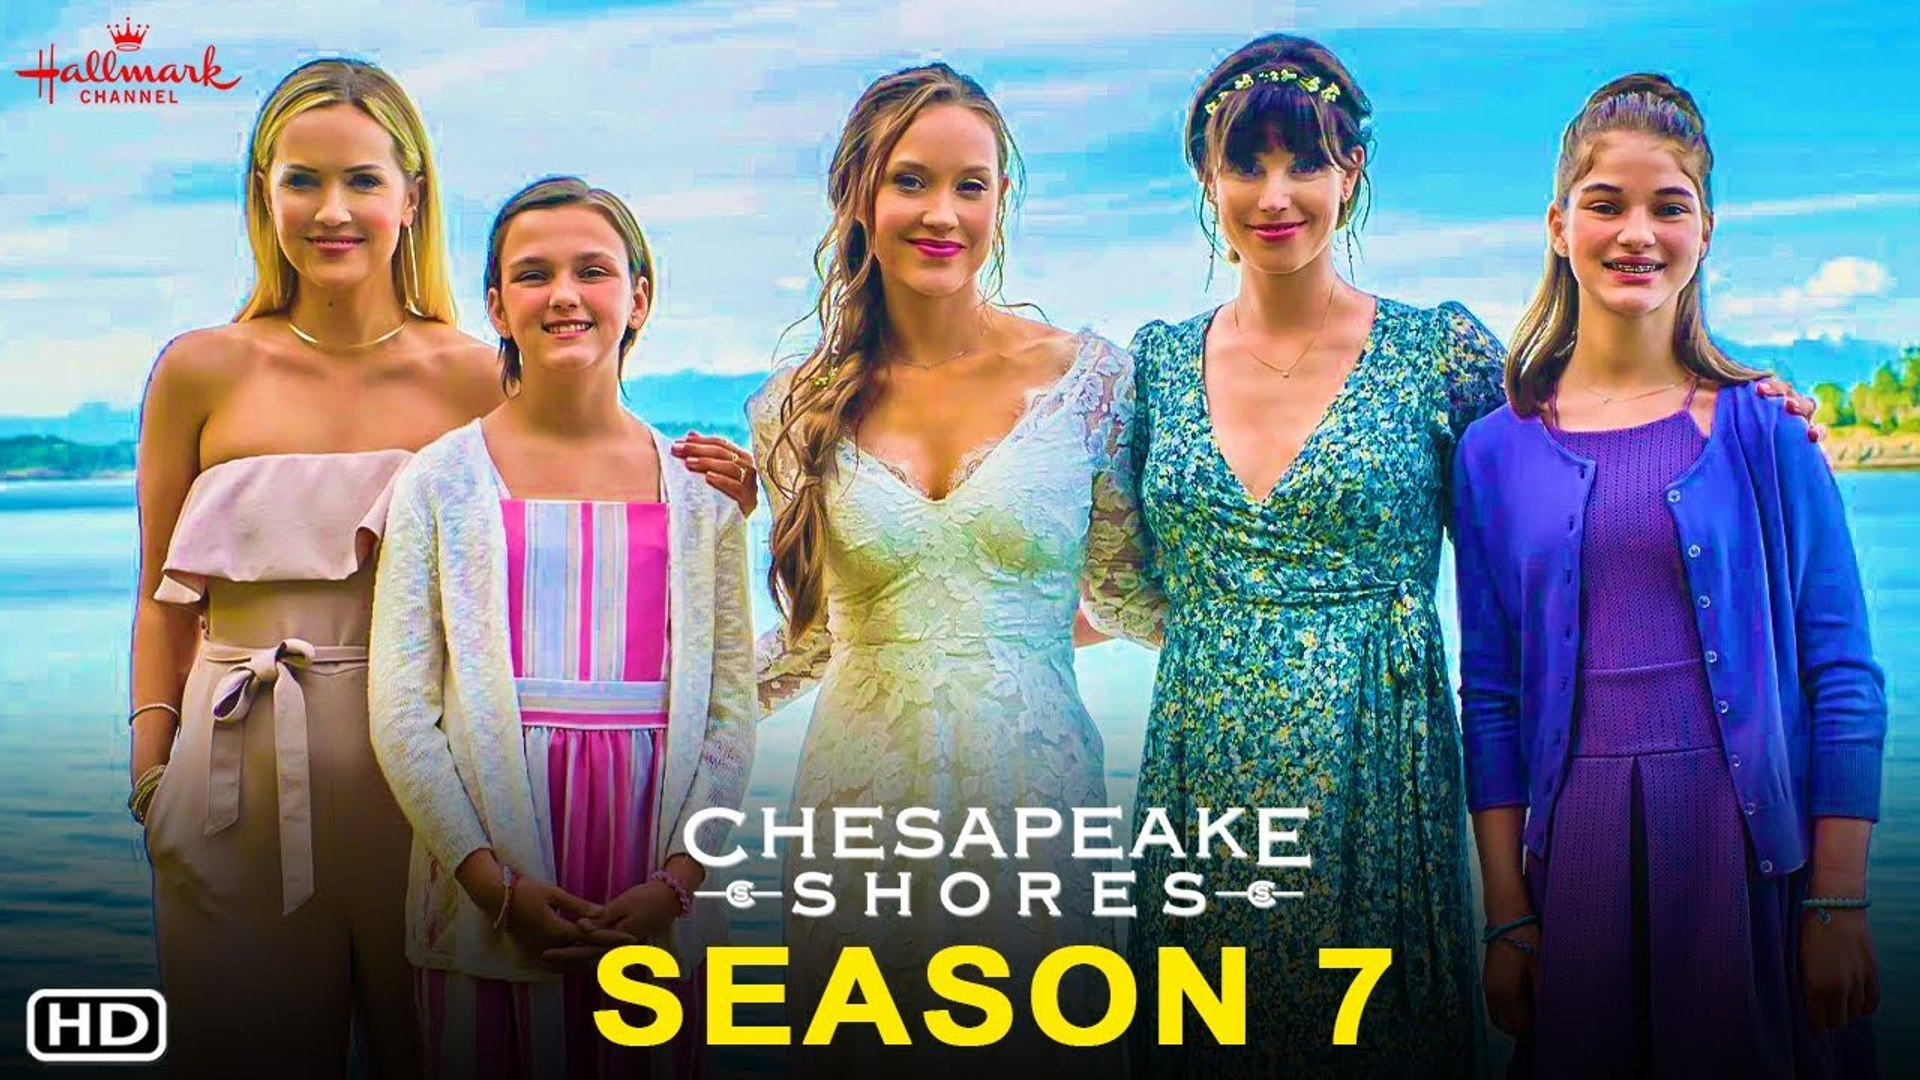 Chesapeake Shores Season 7 Teaser - Hallmark Channel, Meghan Ory